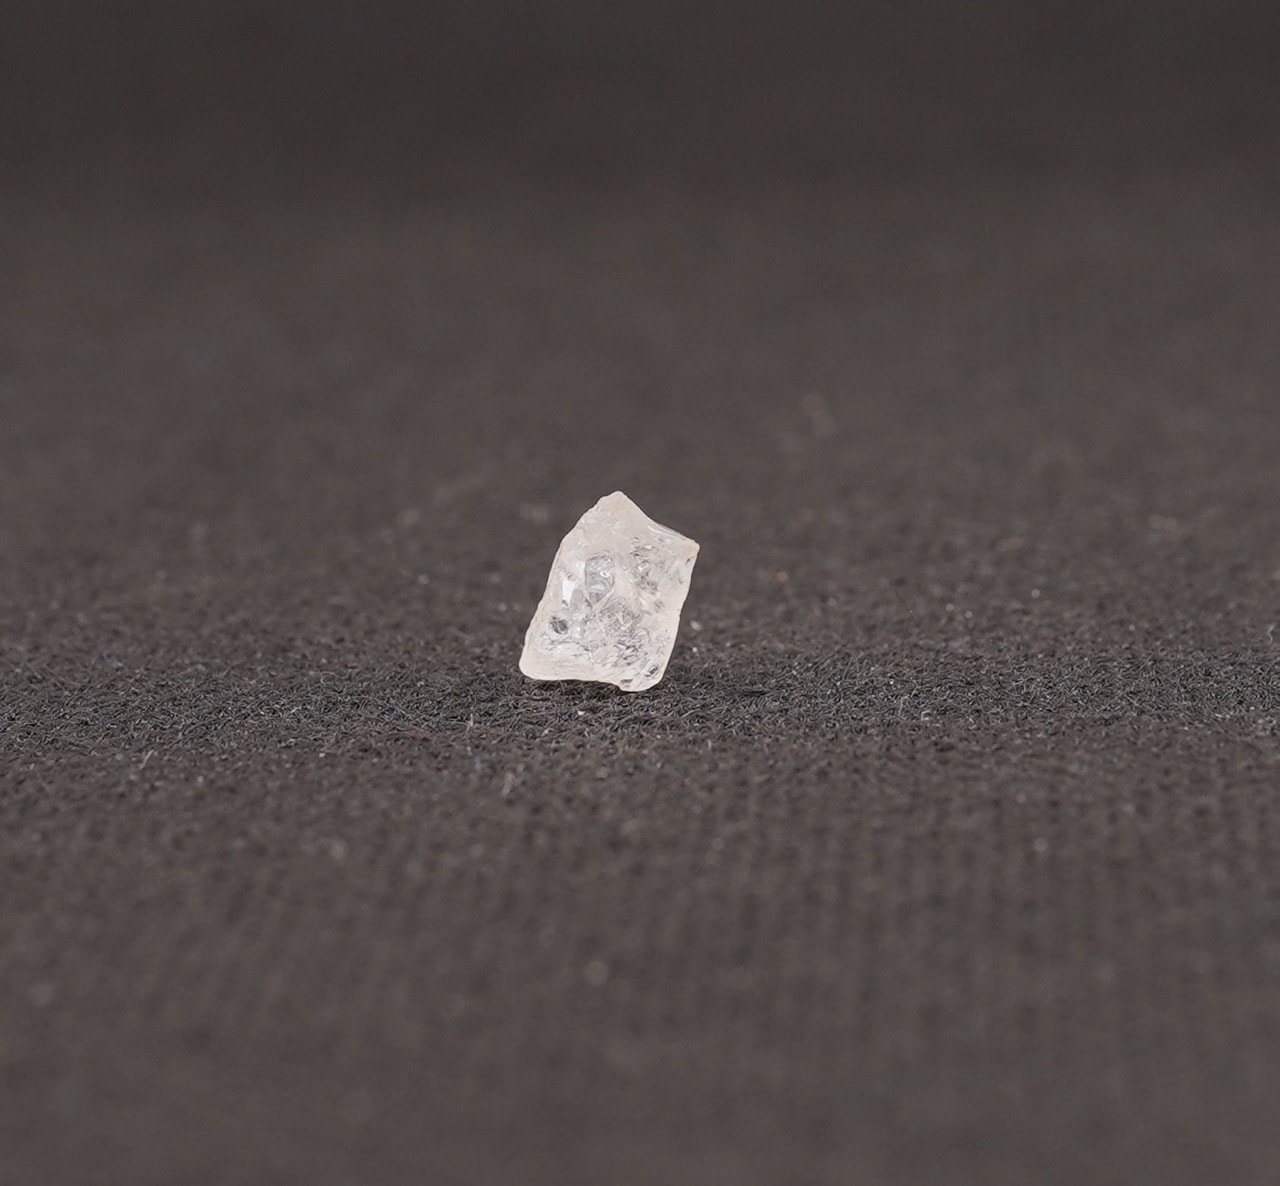 Fenacit nigerian cristal natural unicat f315